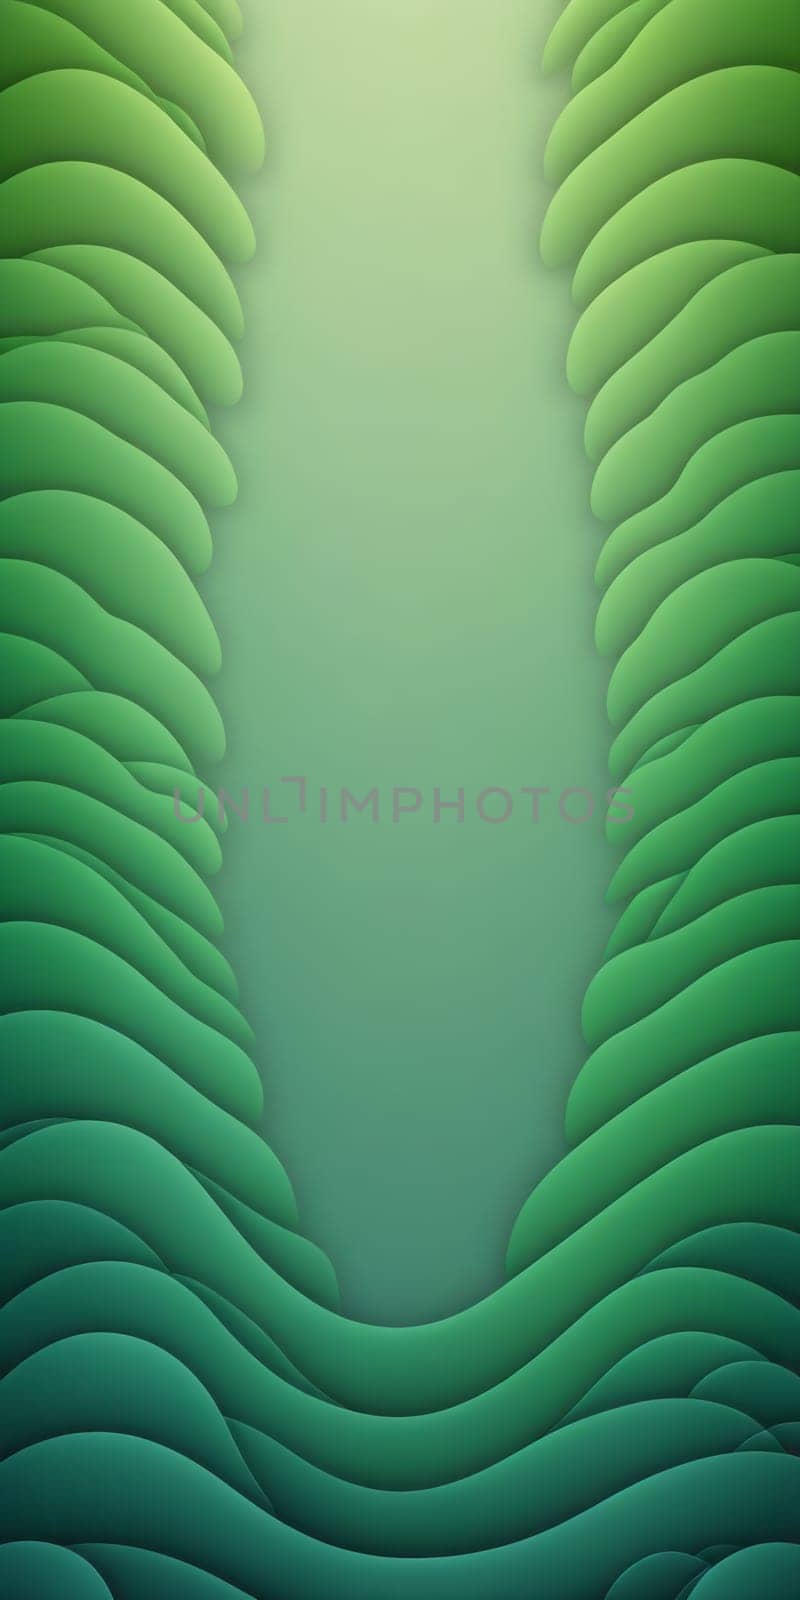 Scalloped Shapes in Green Lightslategray by nkotlyar